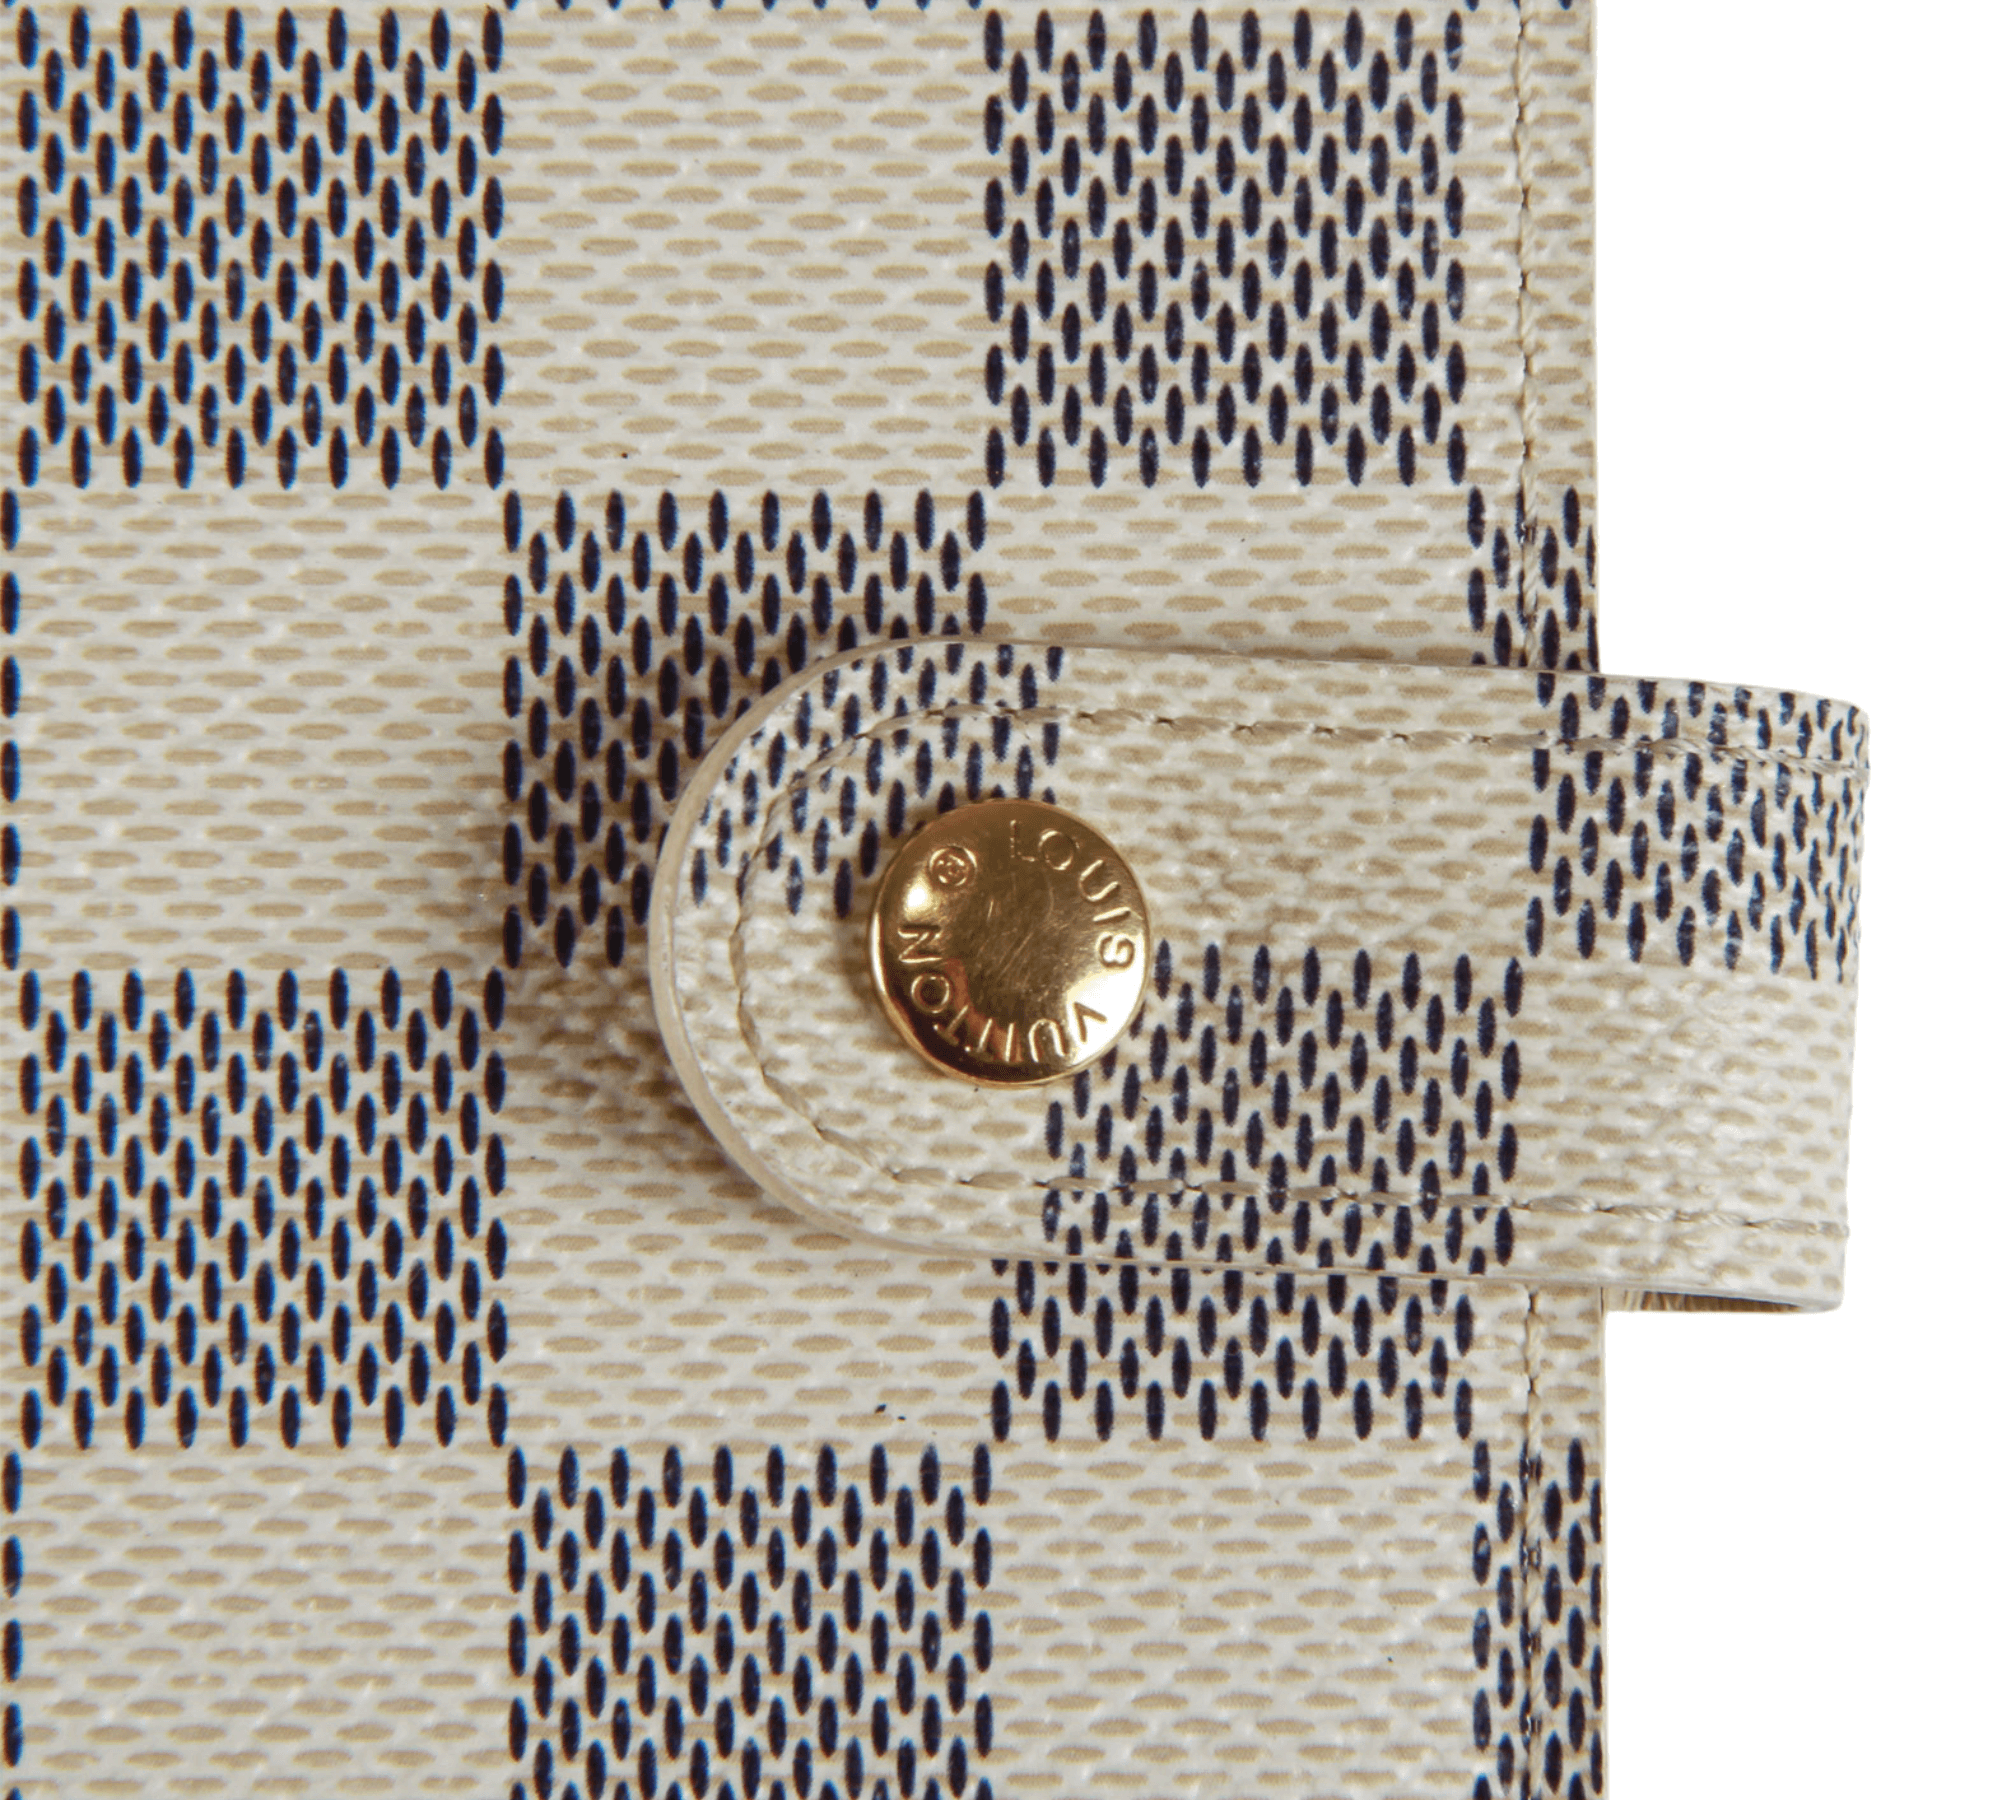 Shop Louis Vuitton MONOGRAM Small ring agenda cover (R20706, R20700,  R20005) by iRodori03